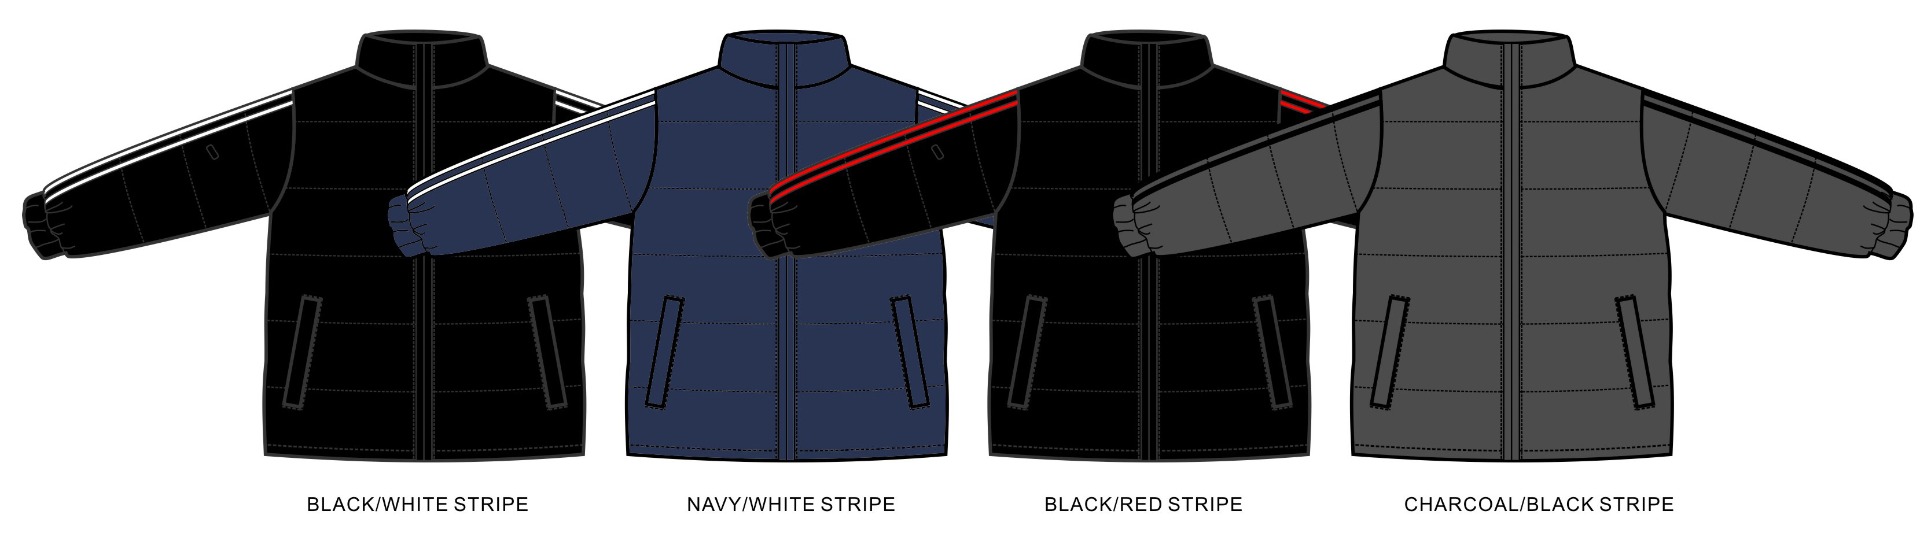 k swiss winter jacket price